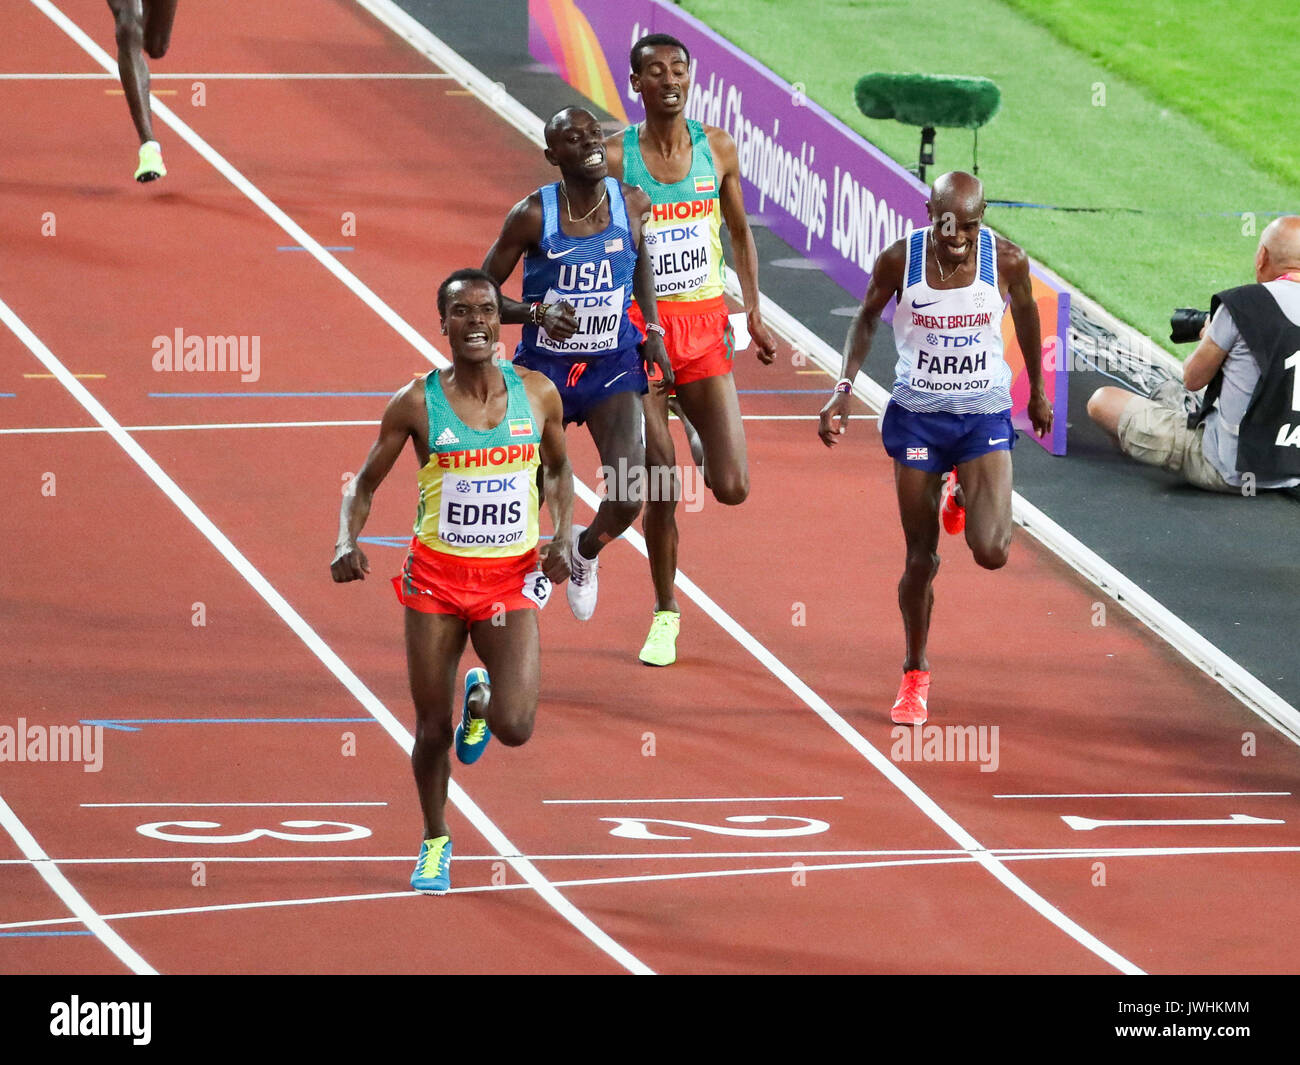 Muktar Edris, Ethiopia, wins ahead of Mo Farah, Great Britain, and Paul Kipkemoi Chelimo, USA, in the men’s 5000m final on day nine of the IAAF London 2017 world Championships at the London Stadium. © Paul Davey. Stock Photo